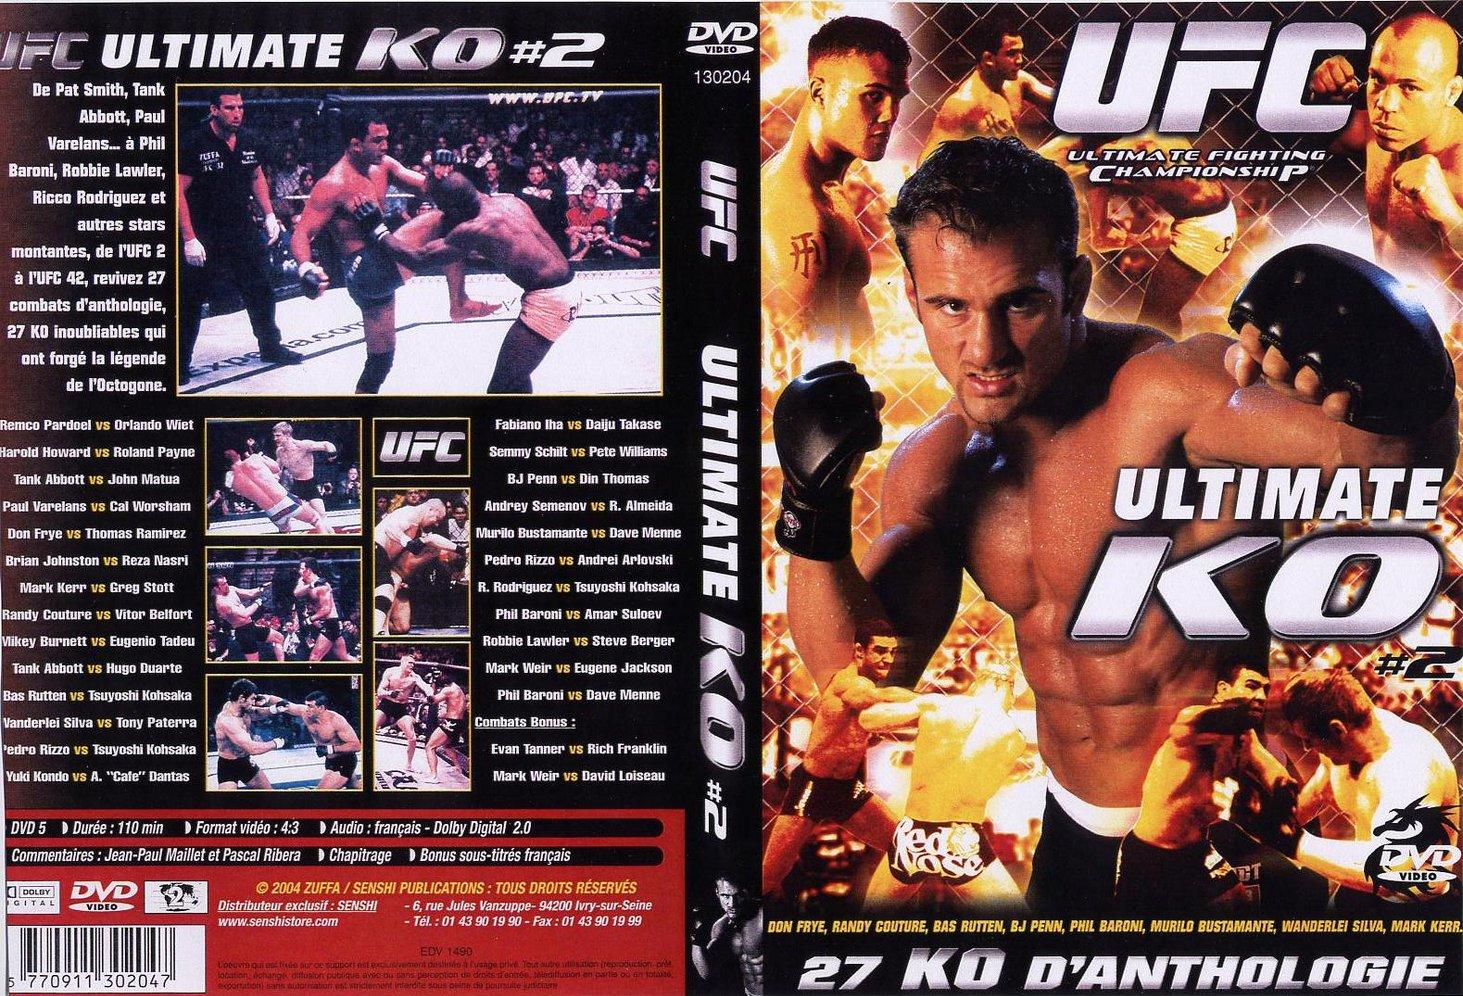 Jaquette DVD Ufc Ultimate Ko Vol 2